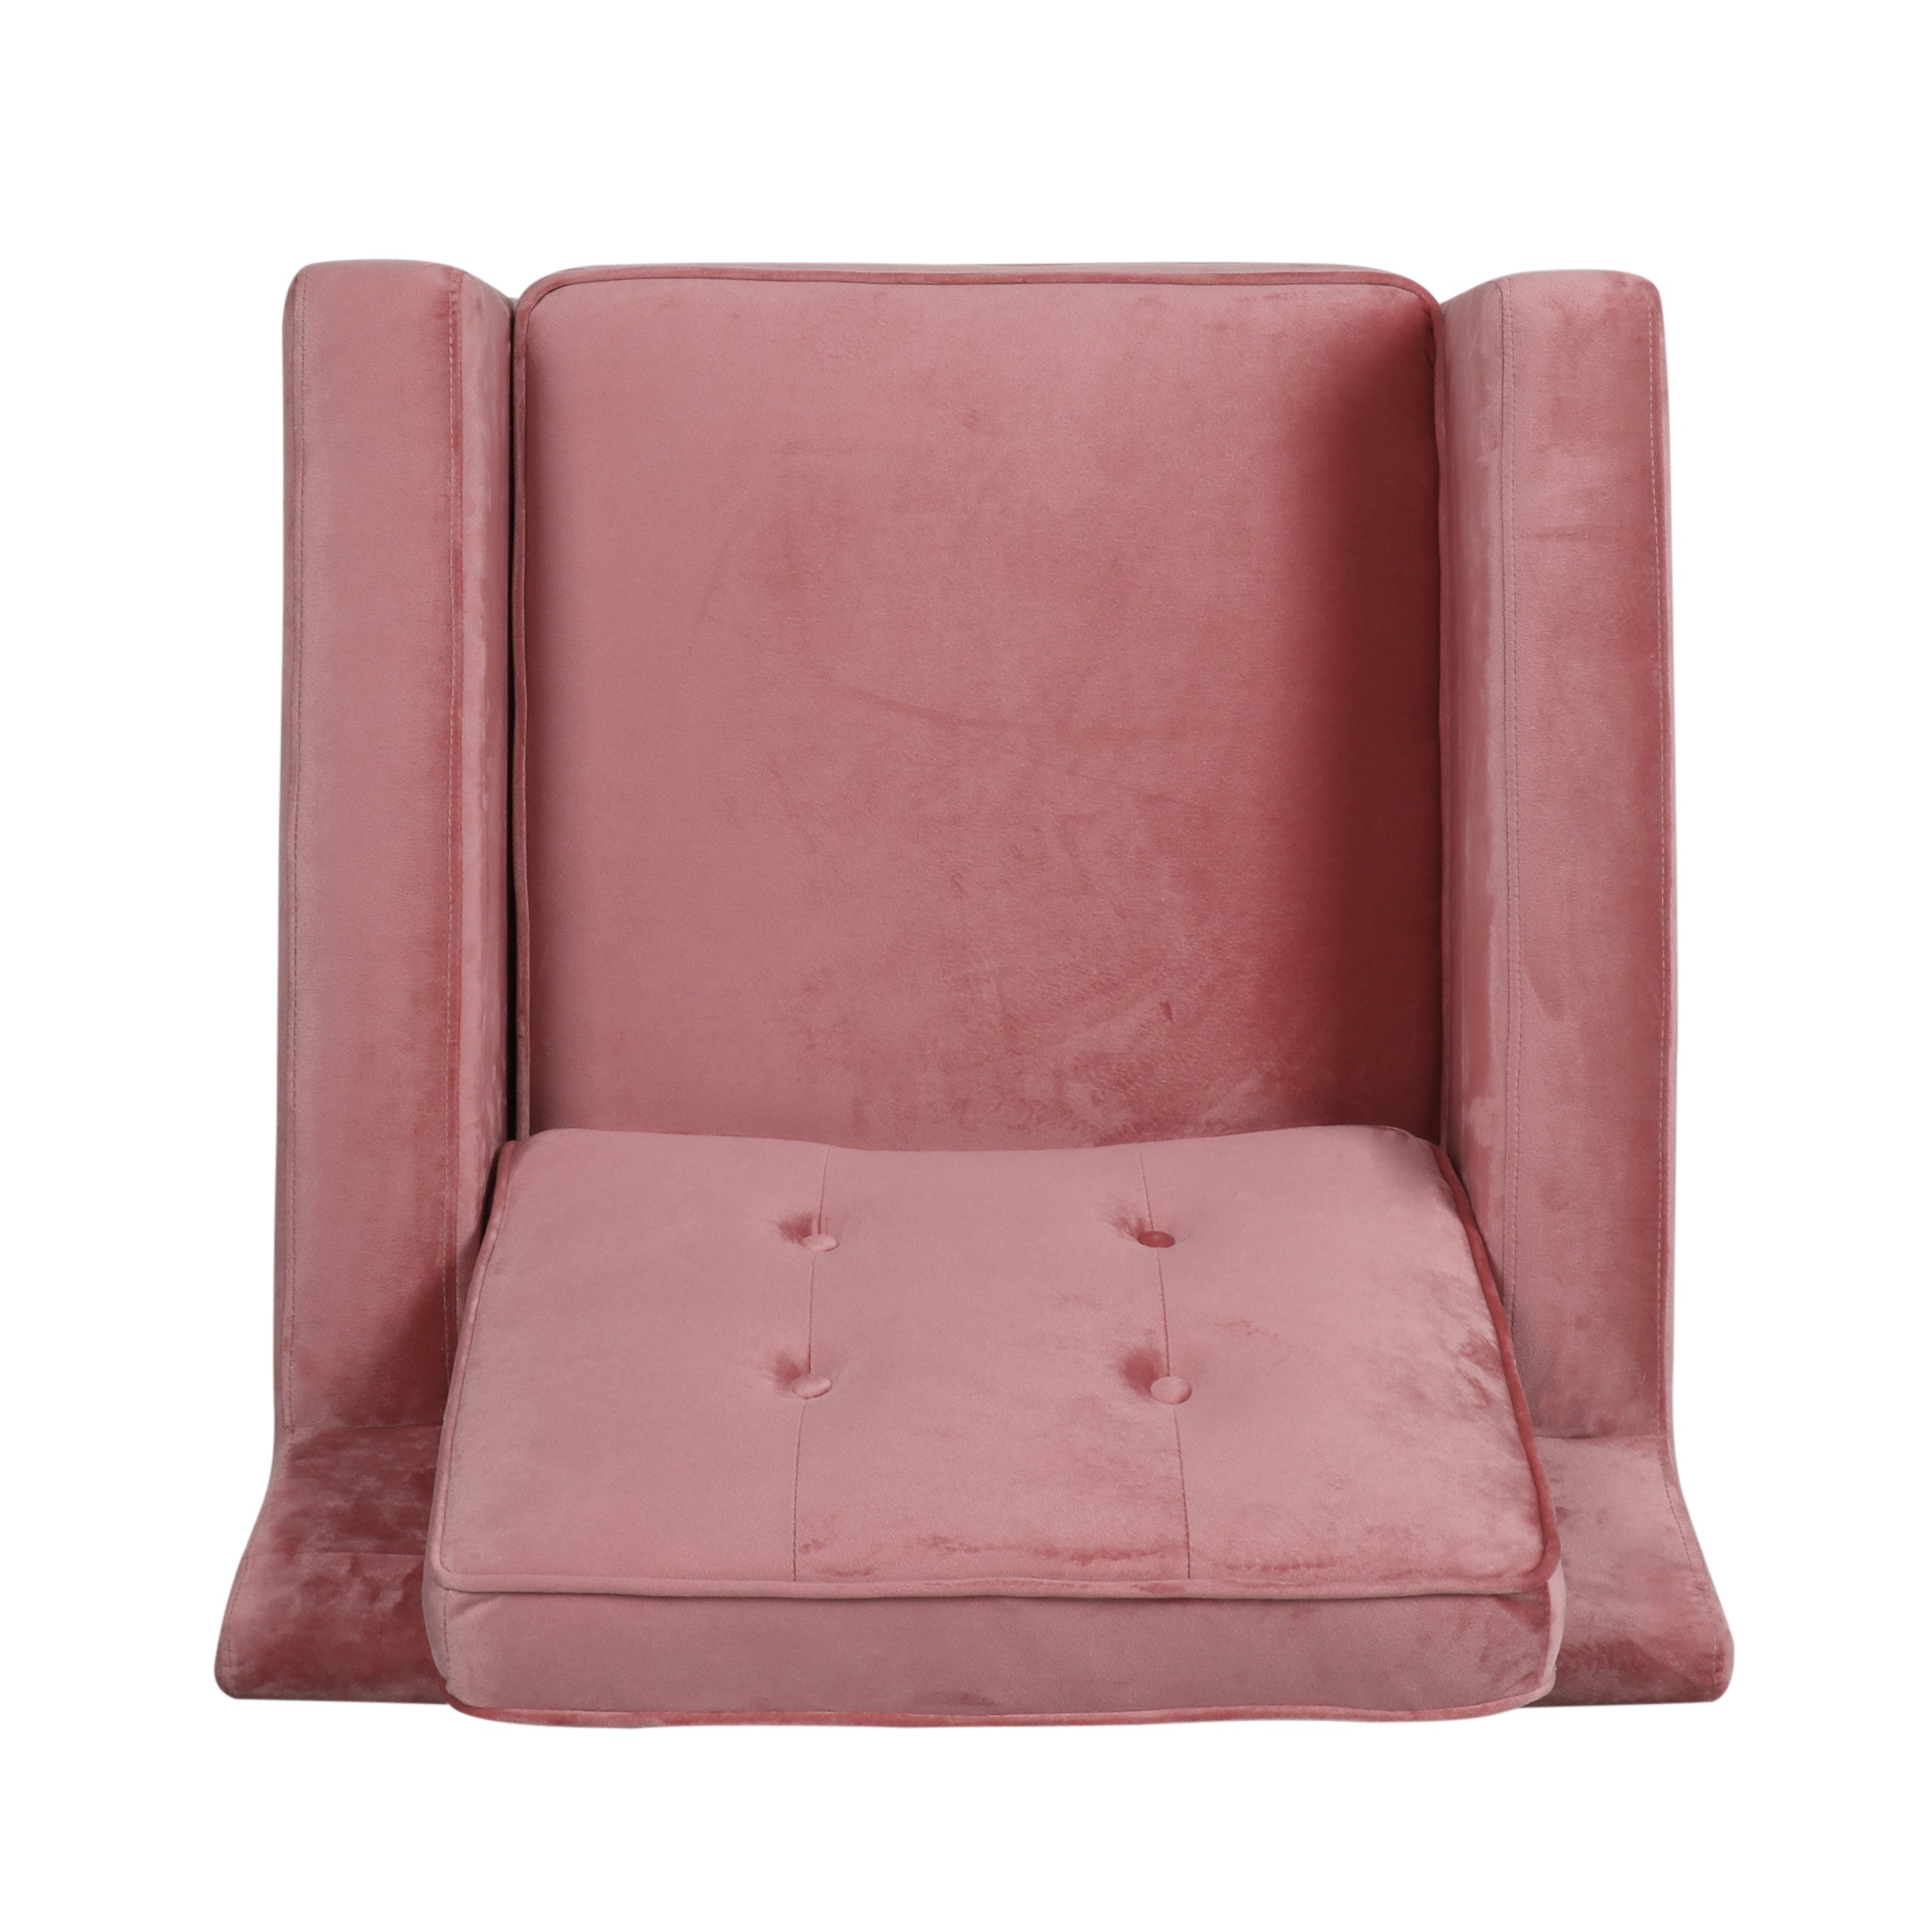 Taylea Modern Glam Tufted Velvet Club Chair